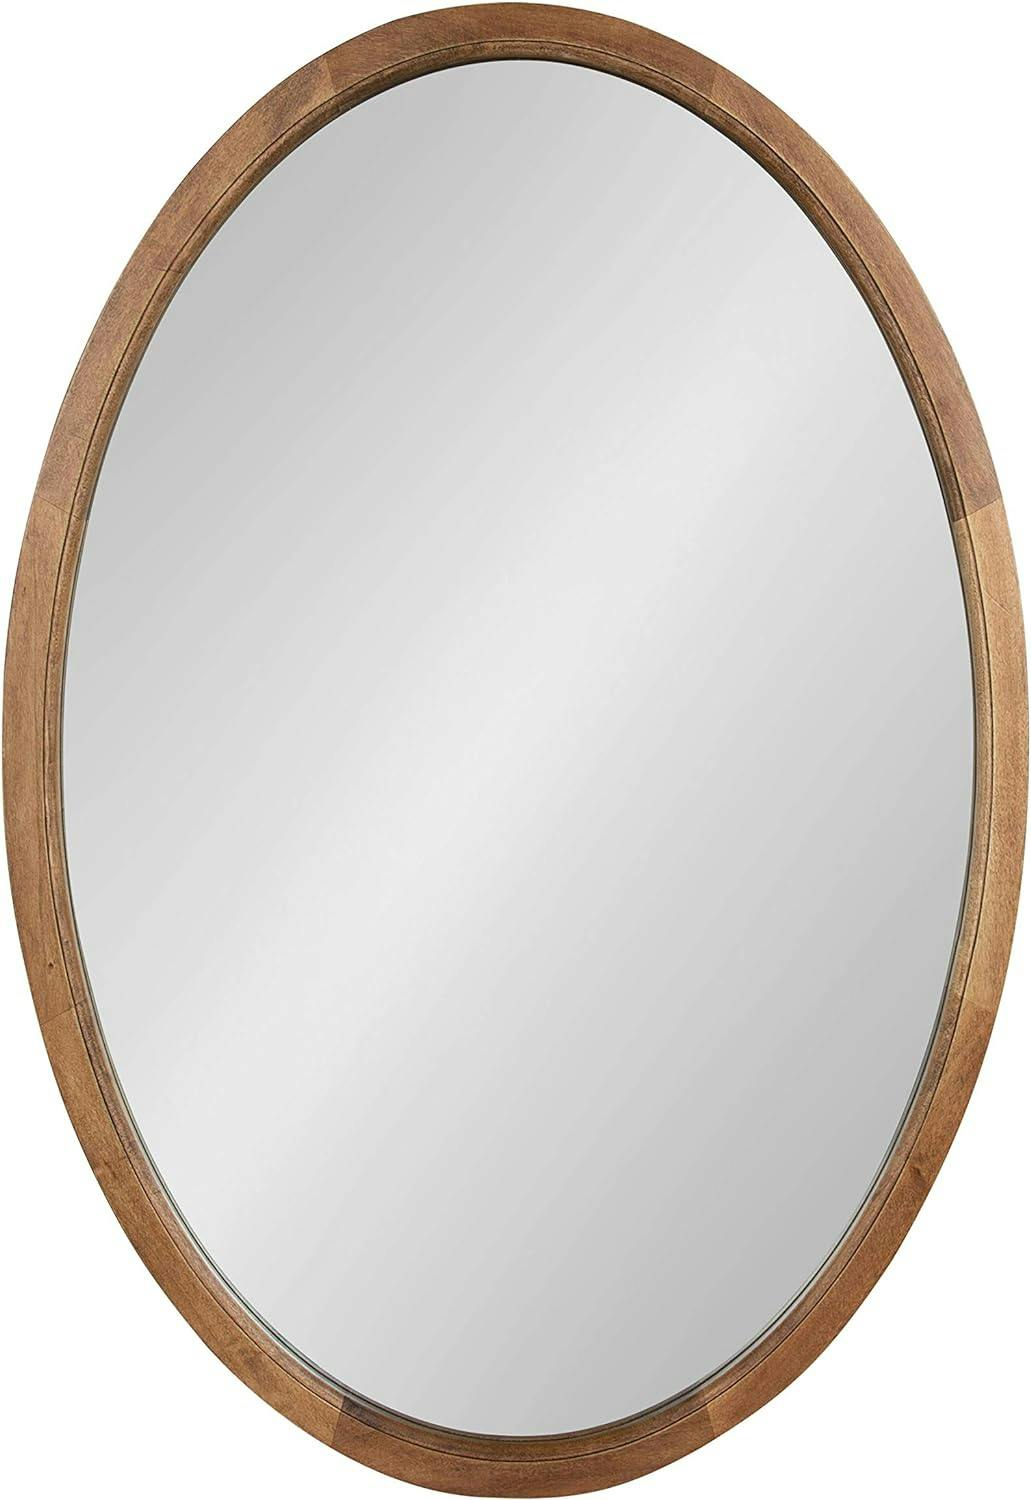 Elegant Farmhouse Oval Wood Bathroom Vanity Mirror, Rustic Brown